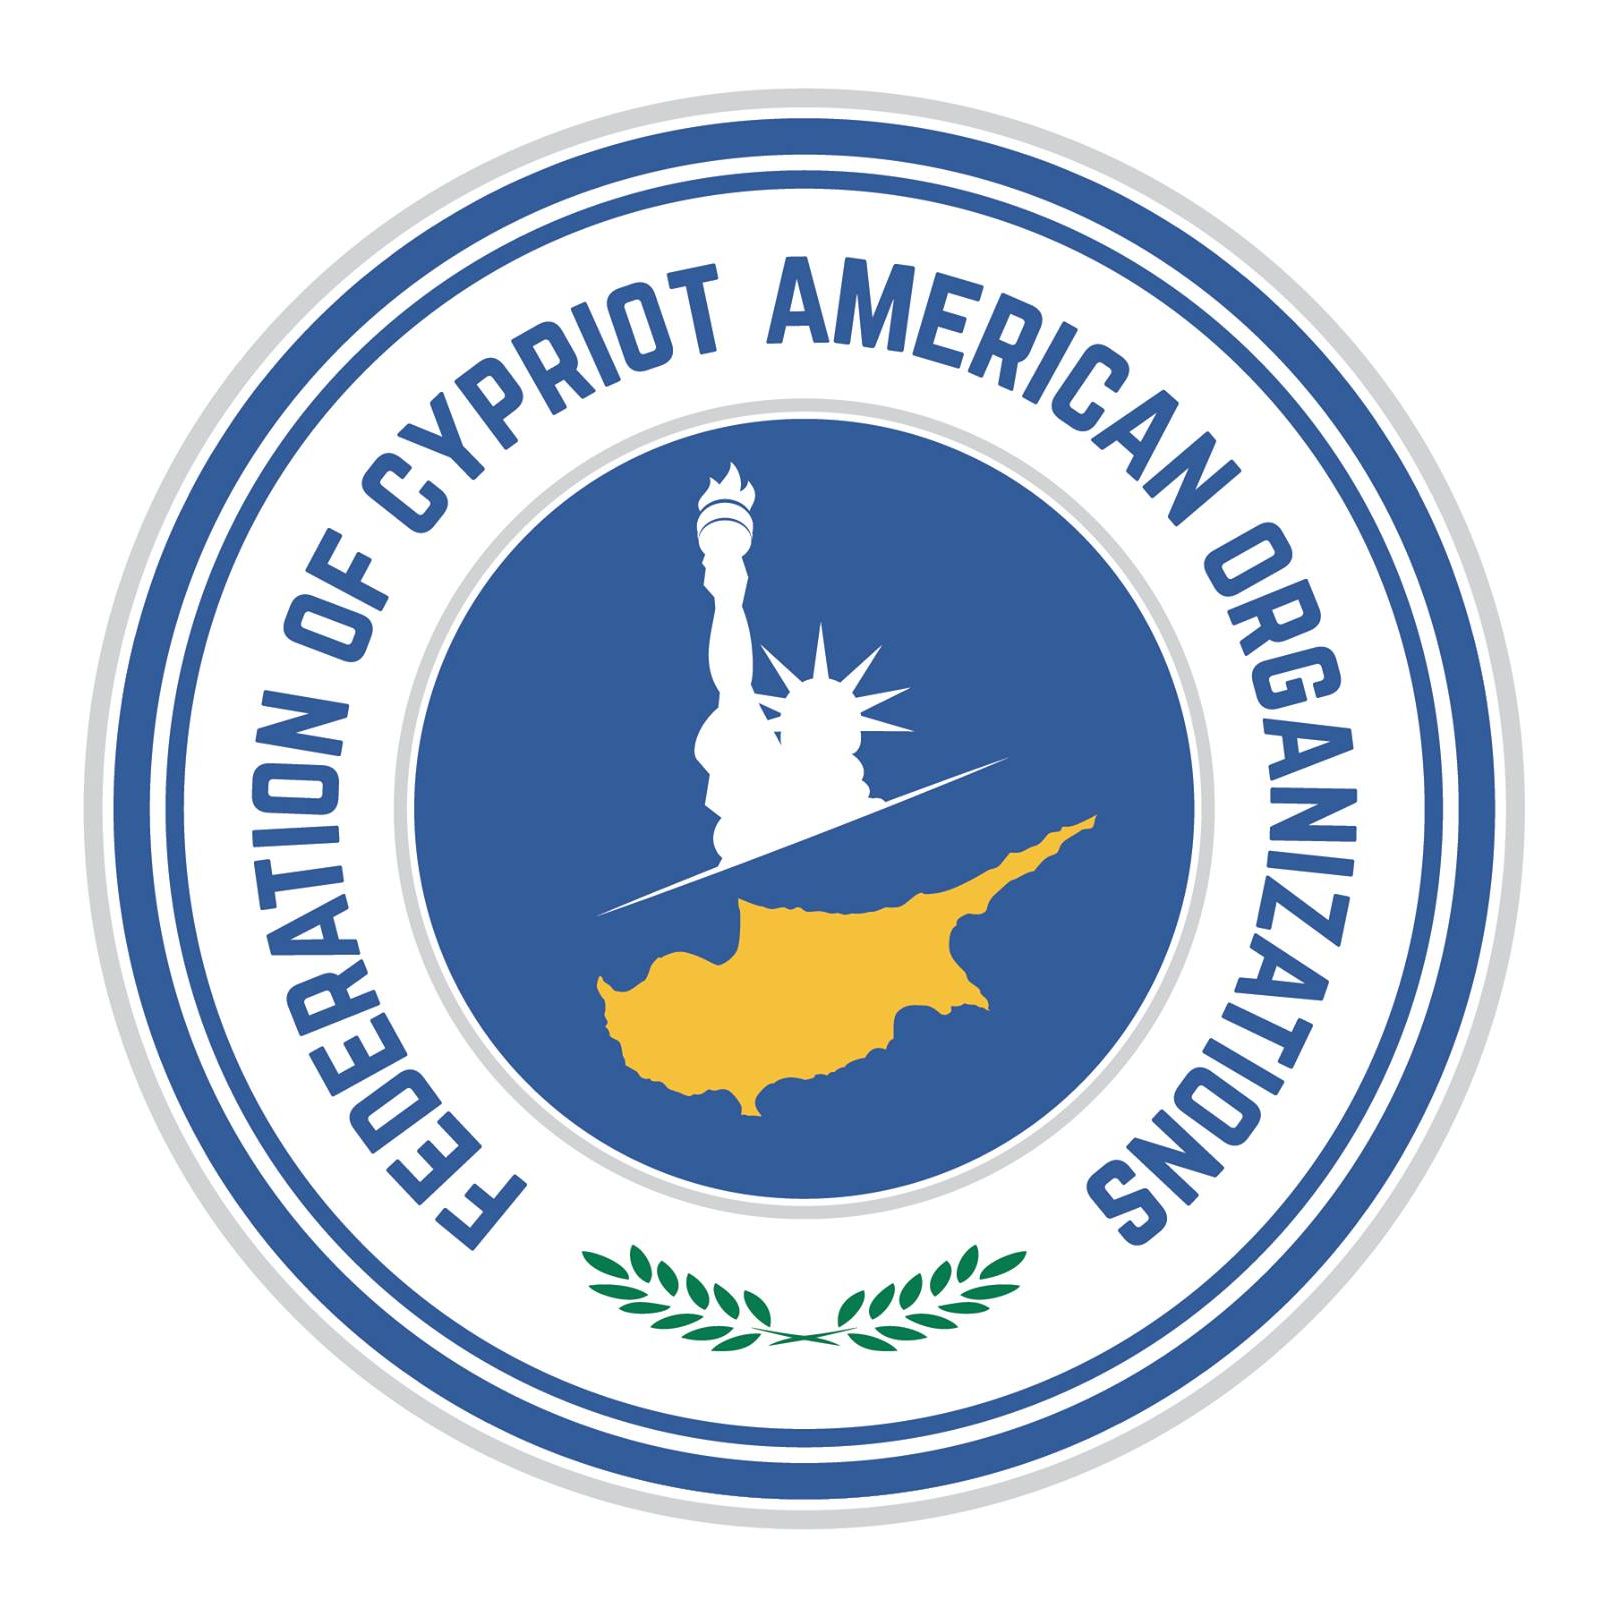 Greek Charity Organization in New York New York - Federation of Cypriot American Organizations